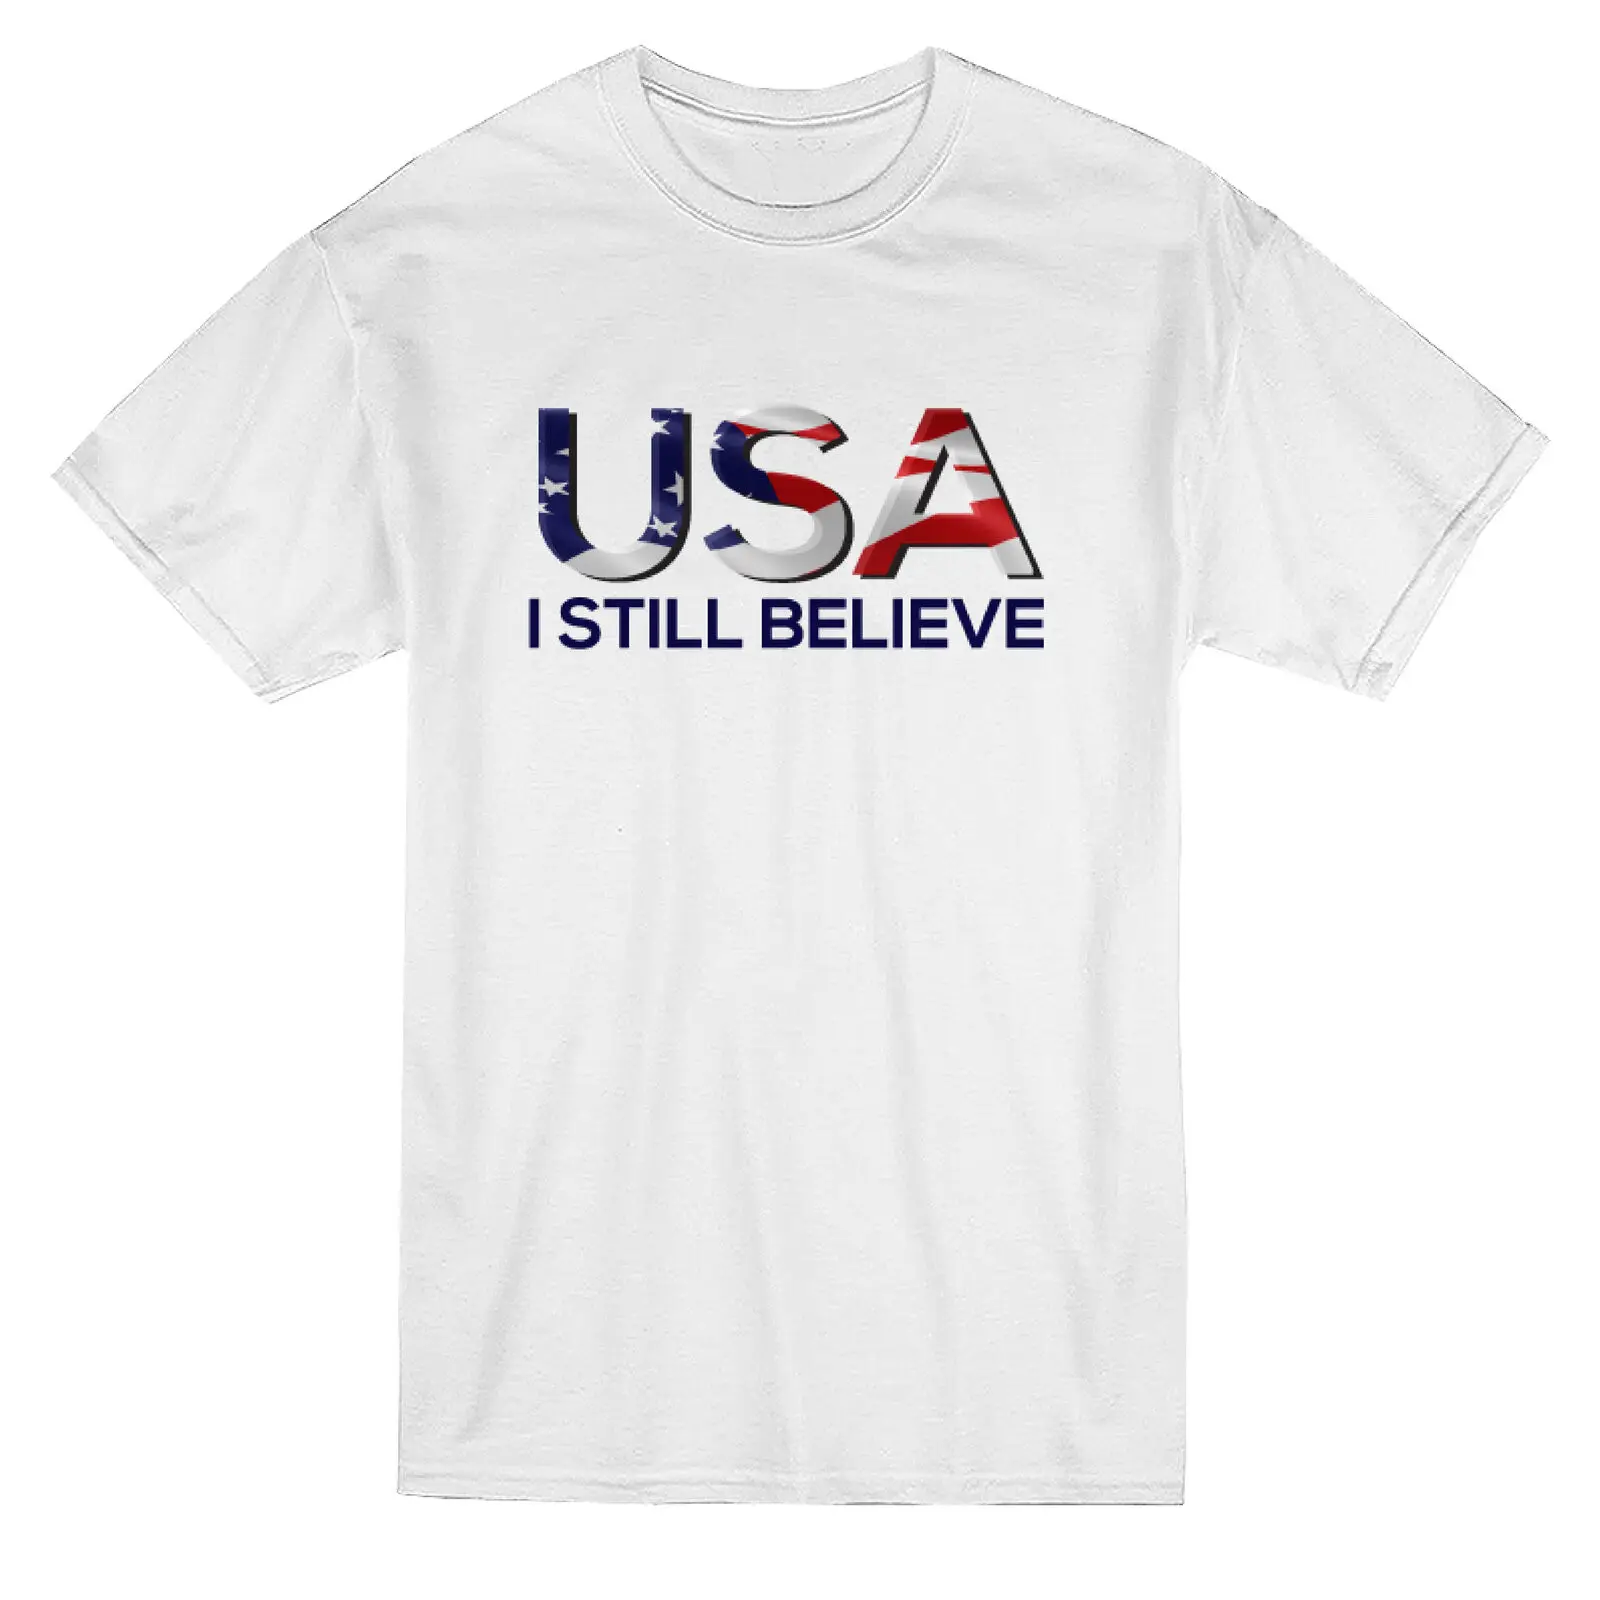 Usa I Still Believe Flag Graphic Men's White T-shirt  Short  Casual  Cotton  men clothing